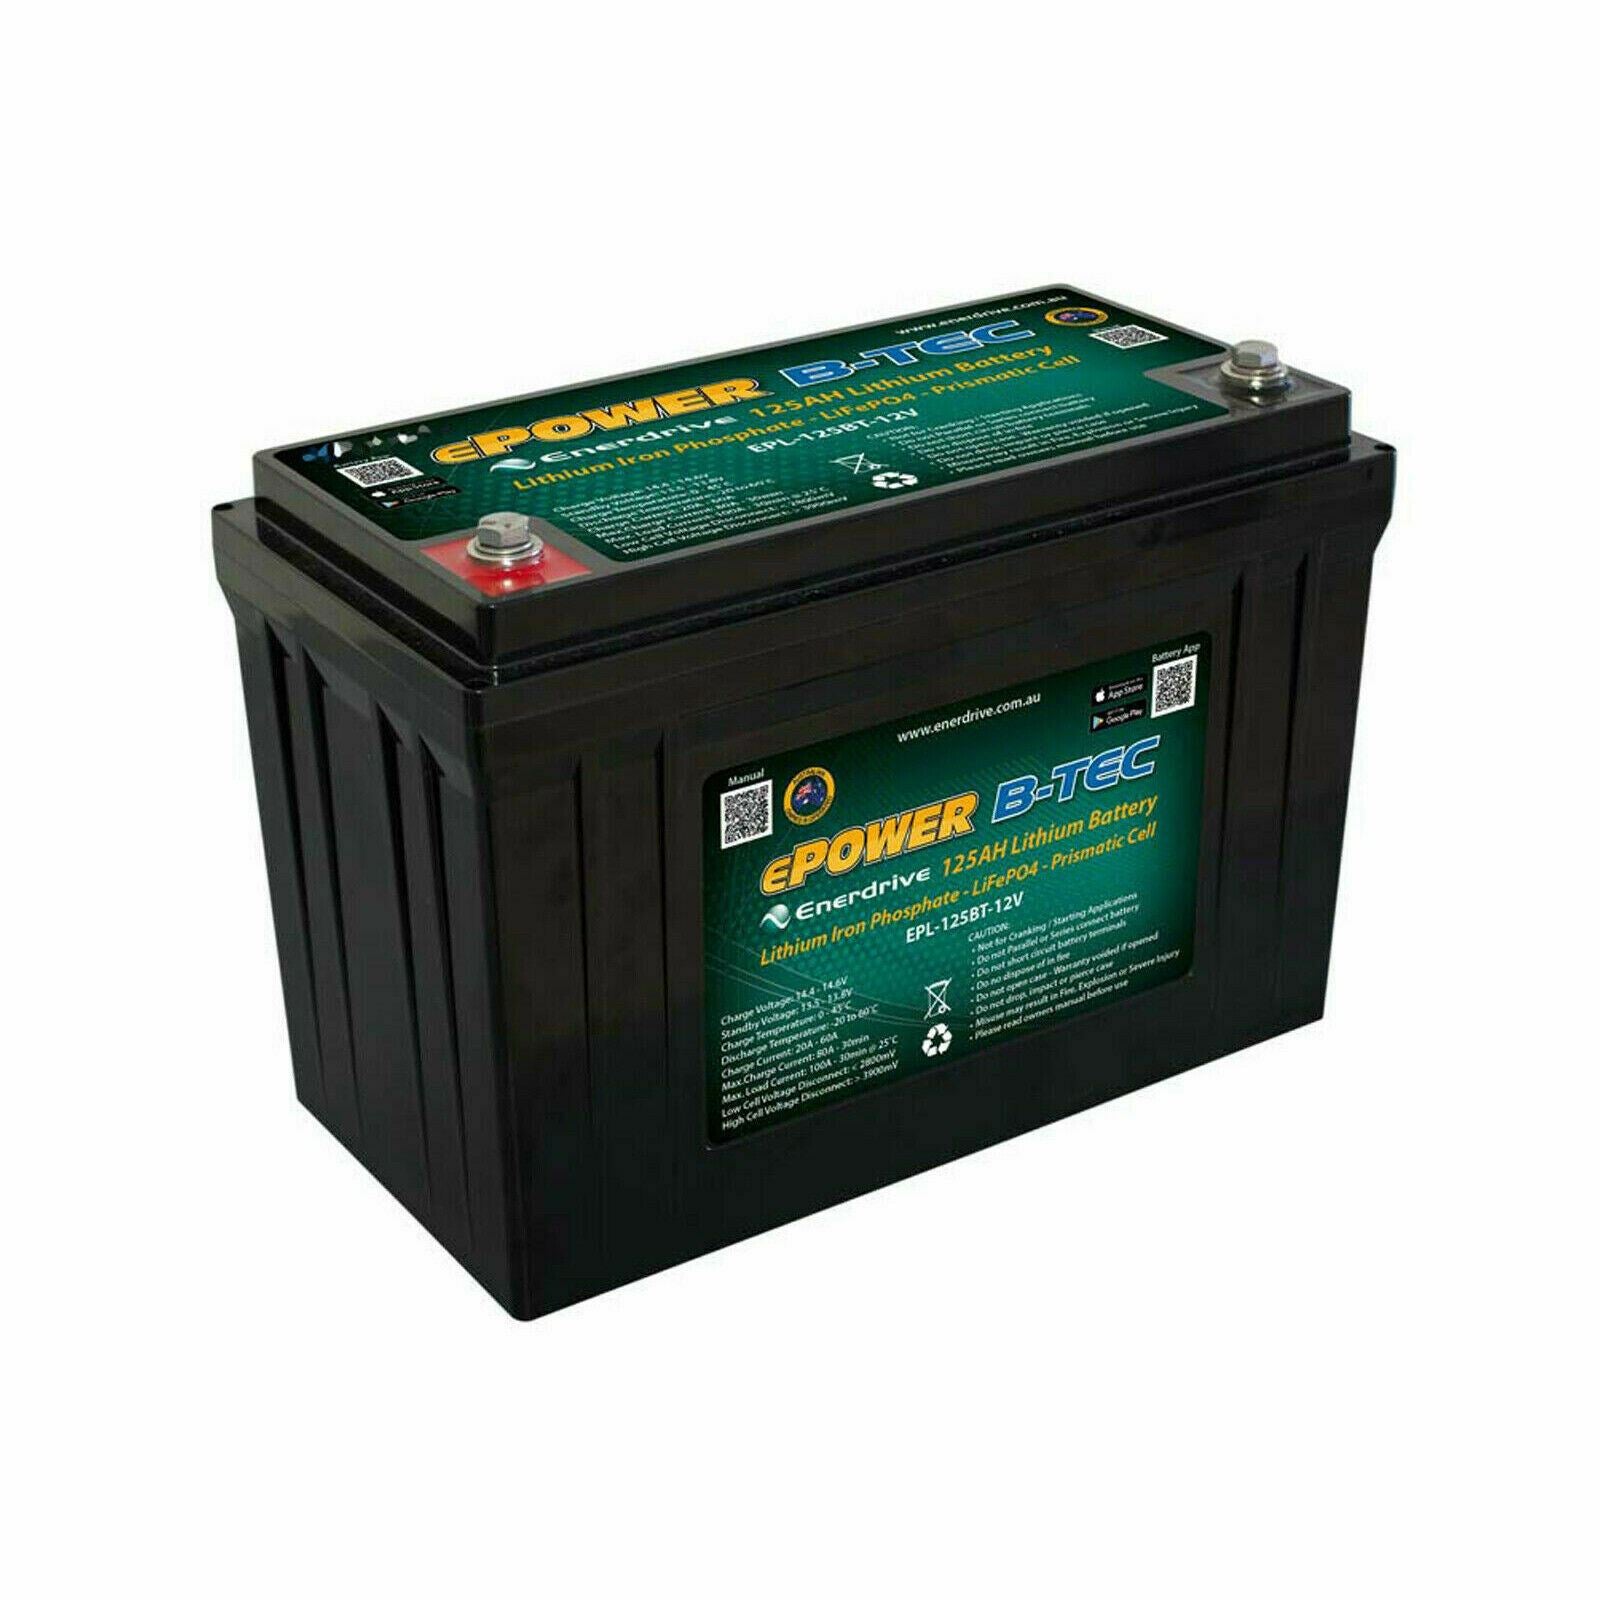 Enerdrive ePOWER B-TEC LiFePO4 Battery Gen2 125Amp 12V EPL-125BT-12V